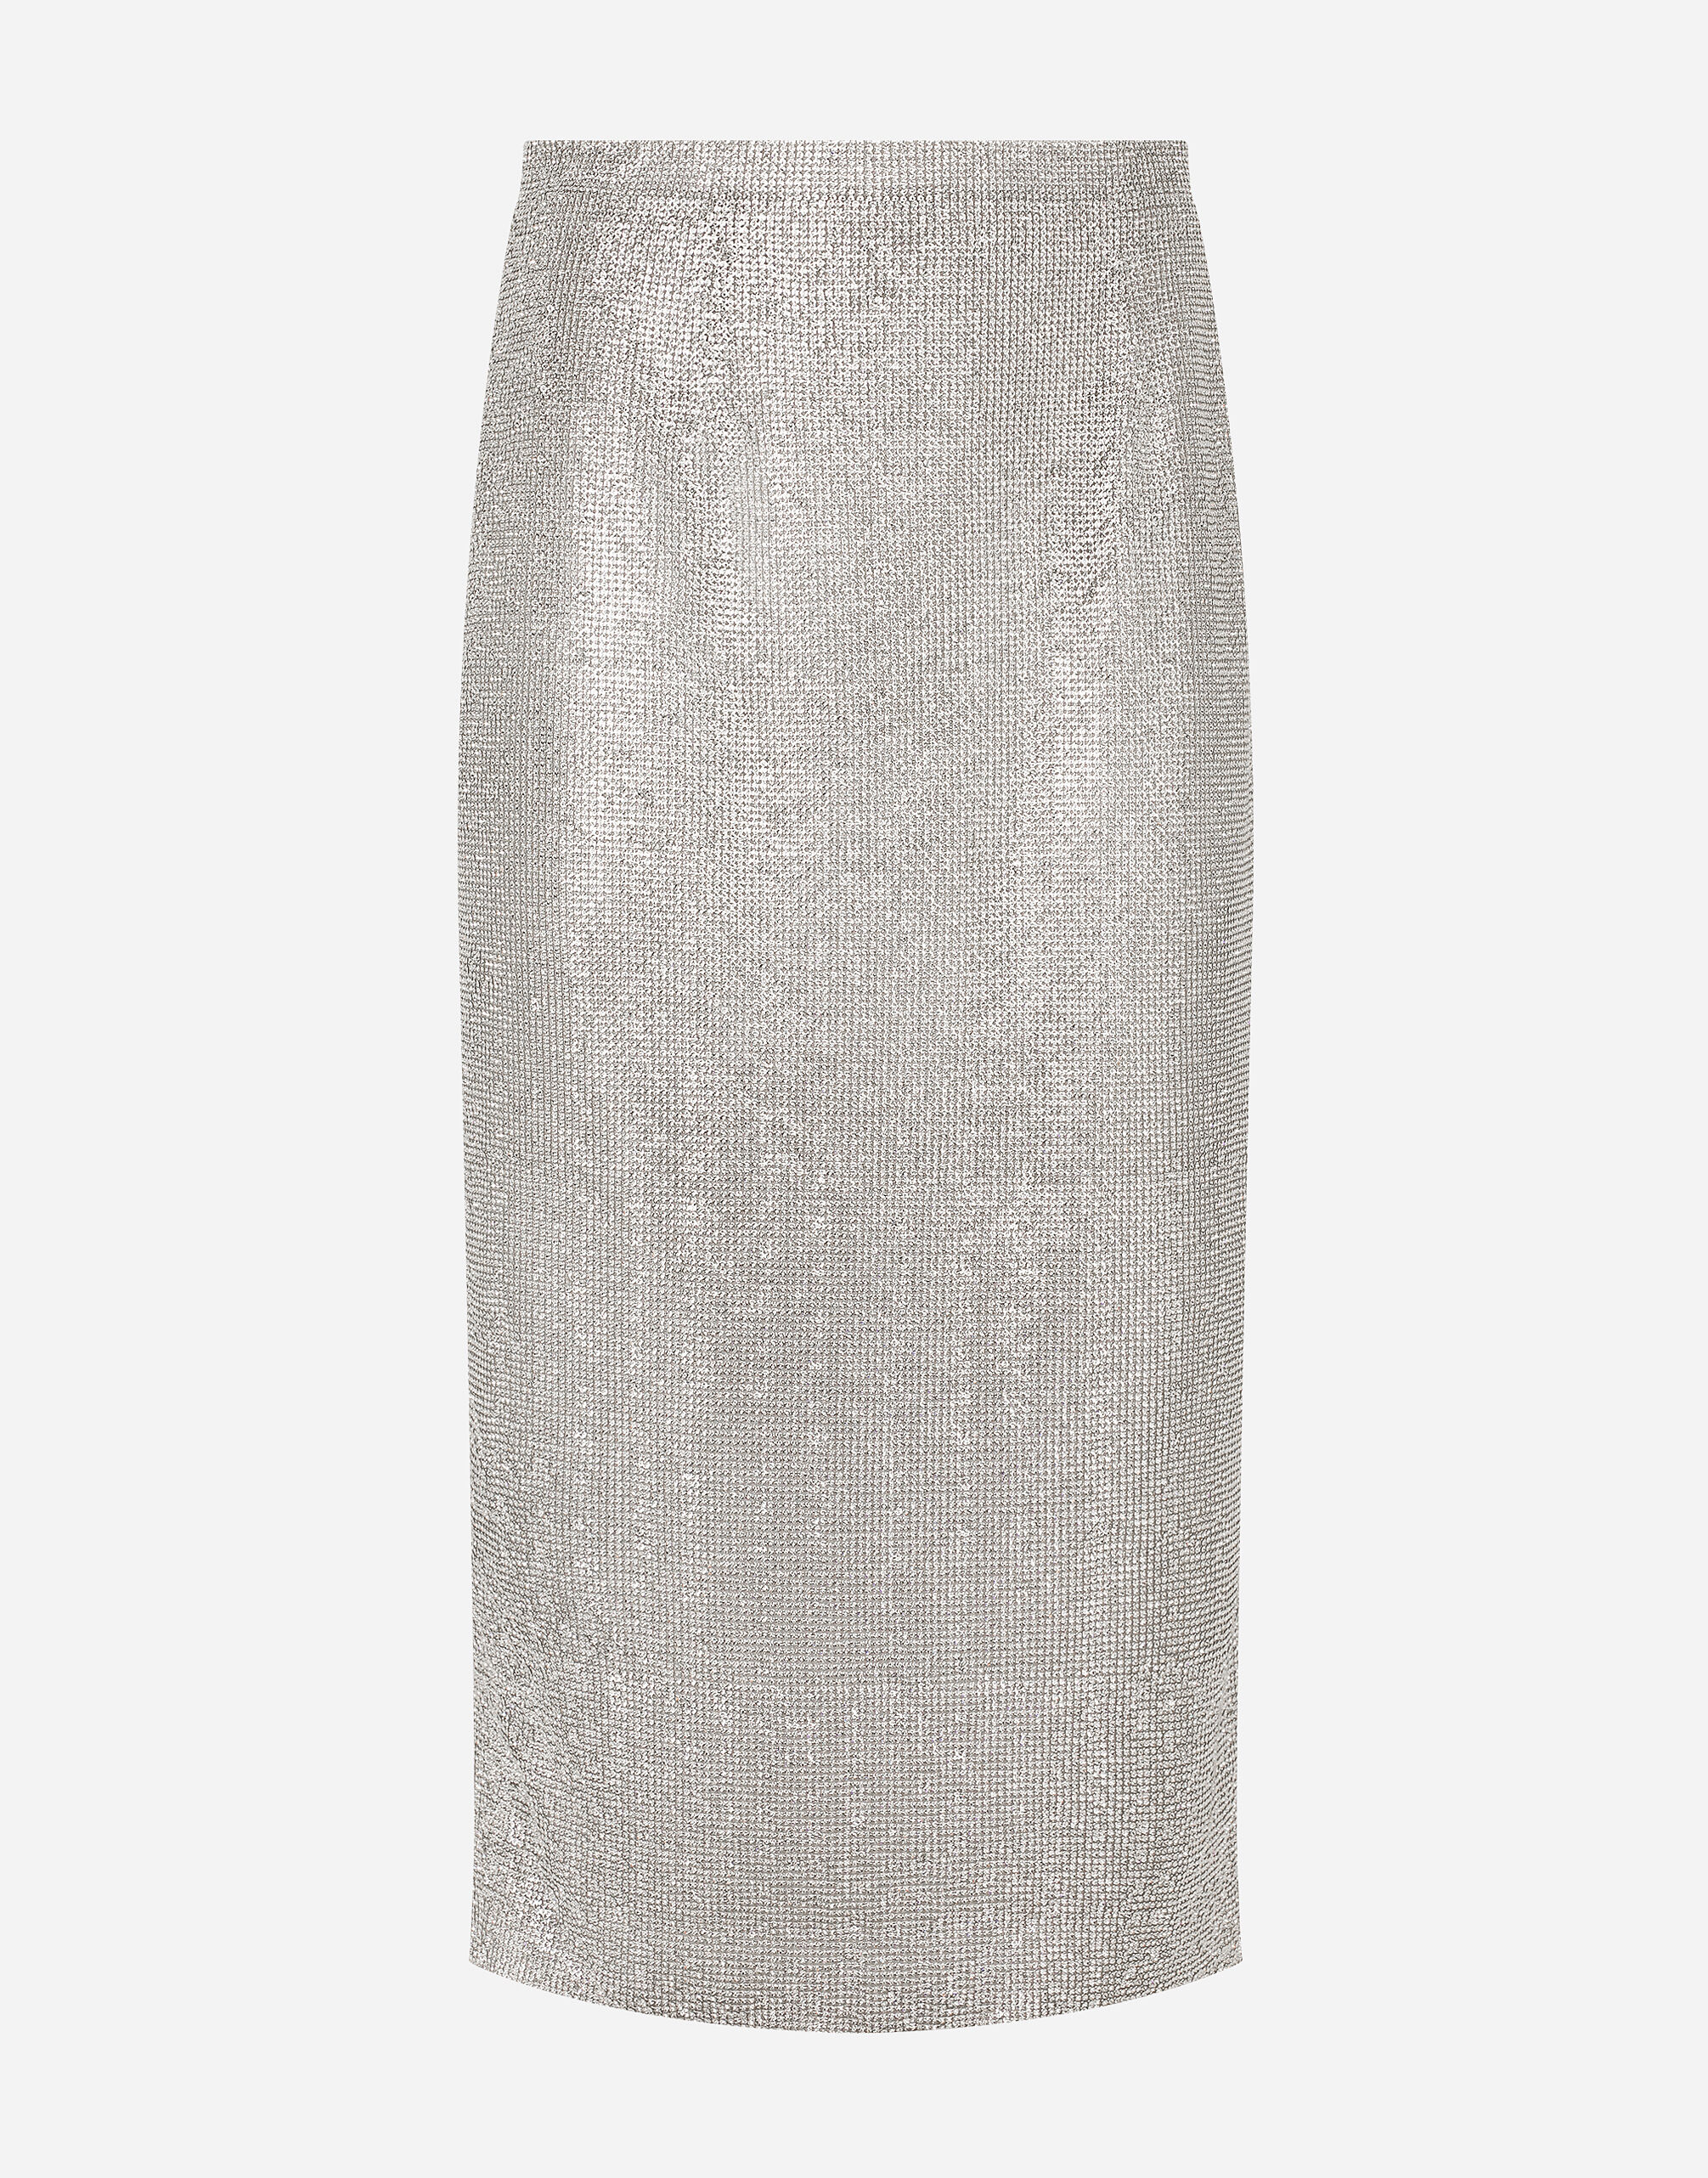 Dolce & Gabbana KIM DOLCE&GABBANA Calf-length crystal mesh pencil skirt Print F4CFETHS5Q1